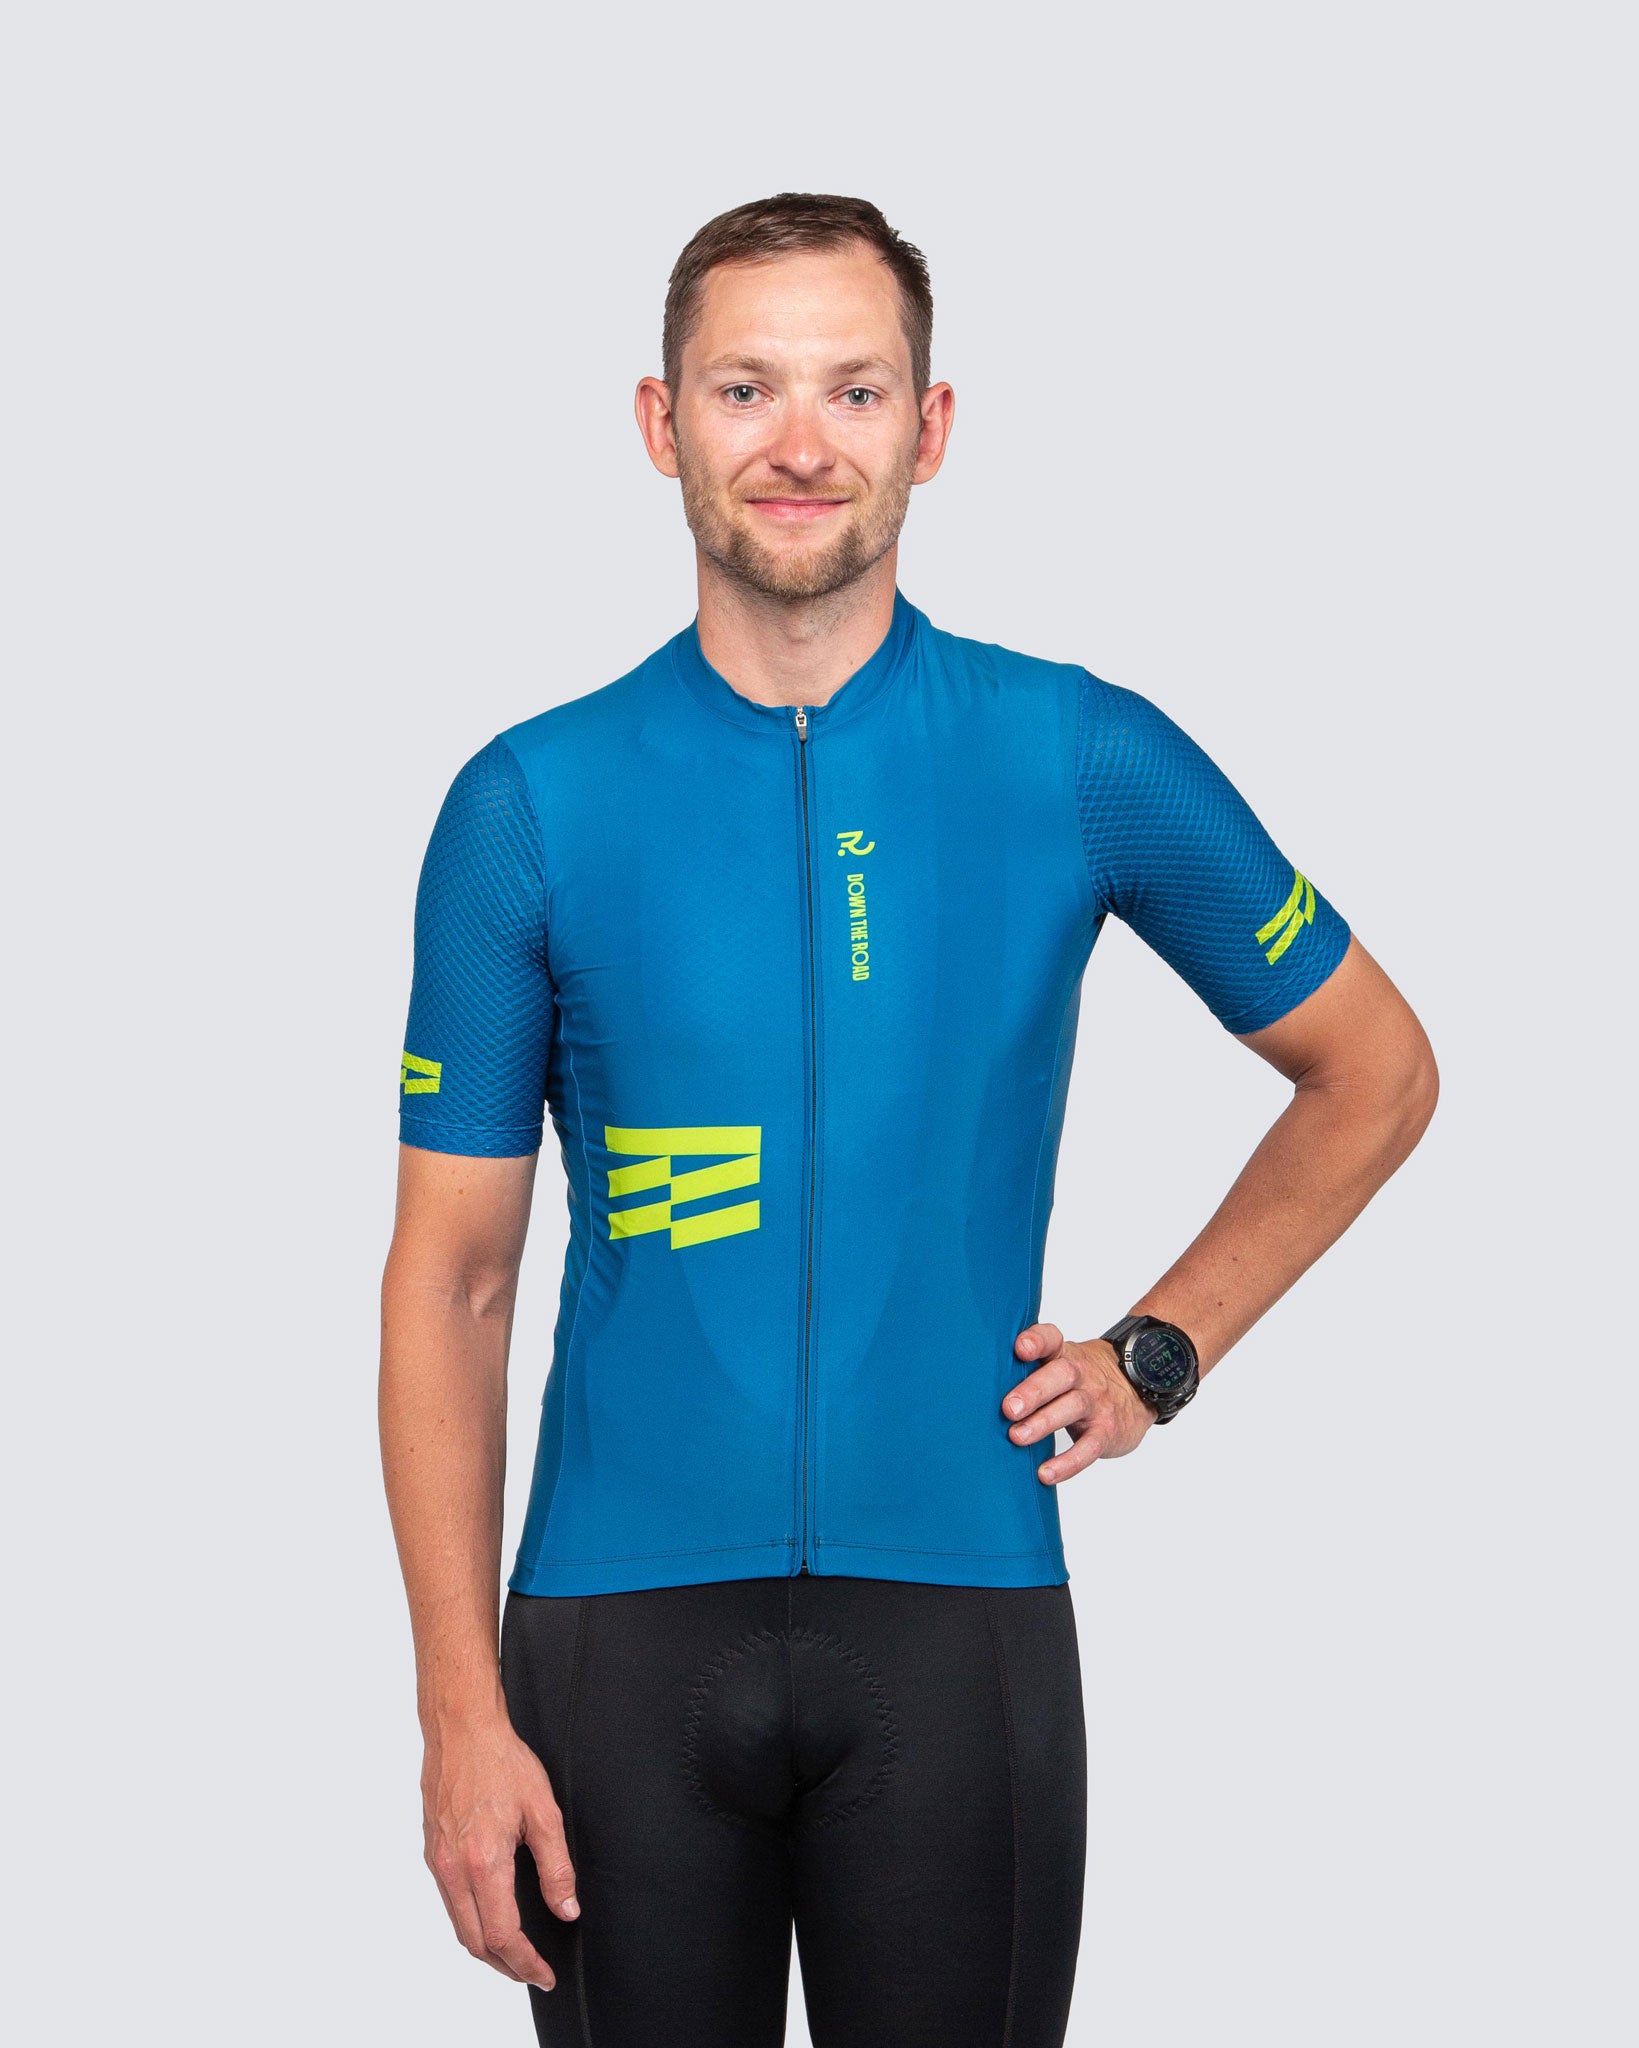 man wearing blue cycling jersey